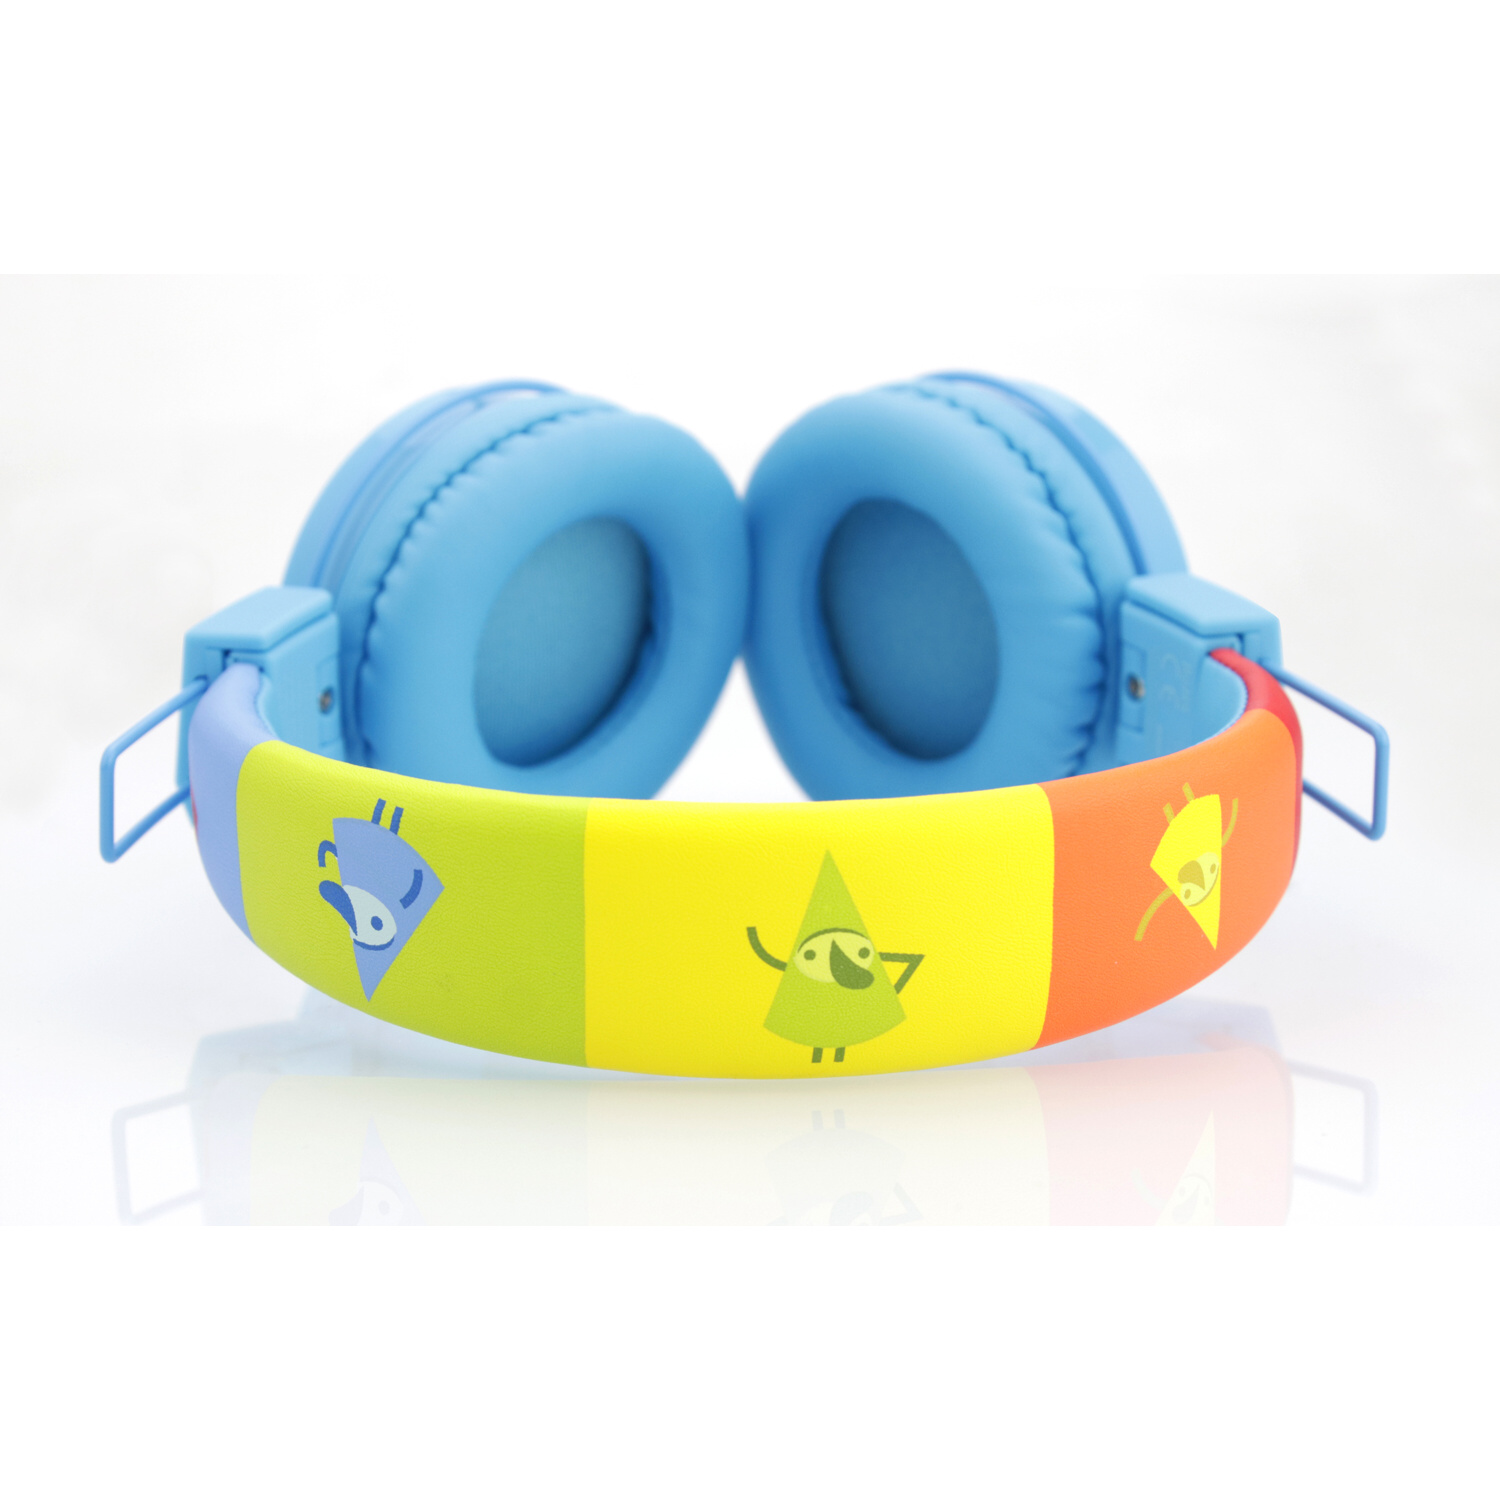 GOGEN DECKO SLECHY B, Over-ear Kopfhörer Blau Bluetooth